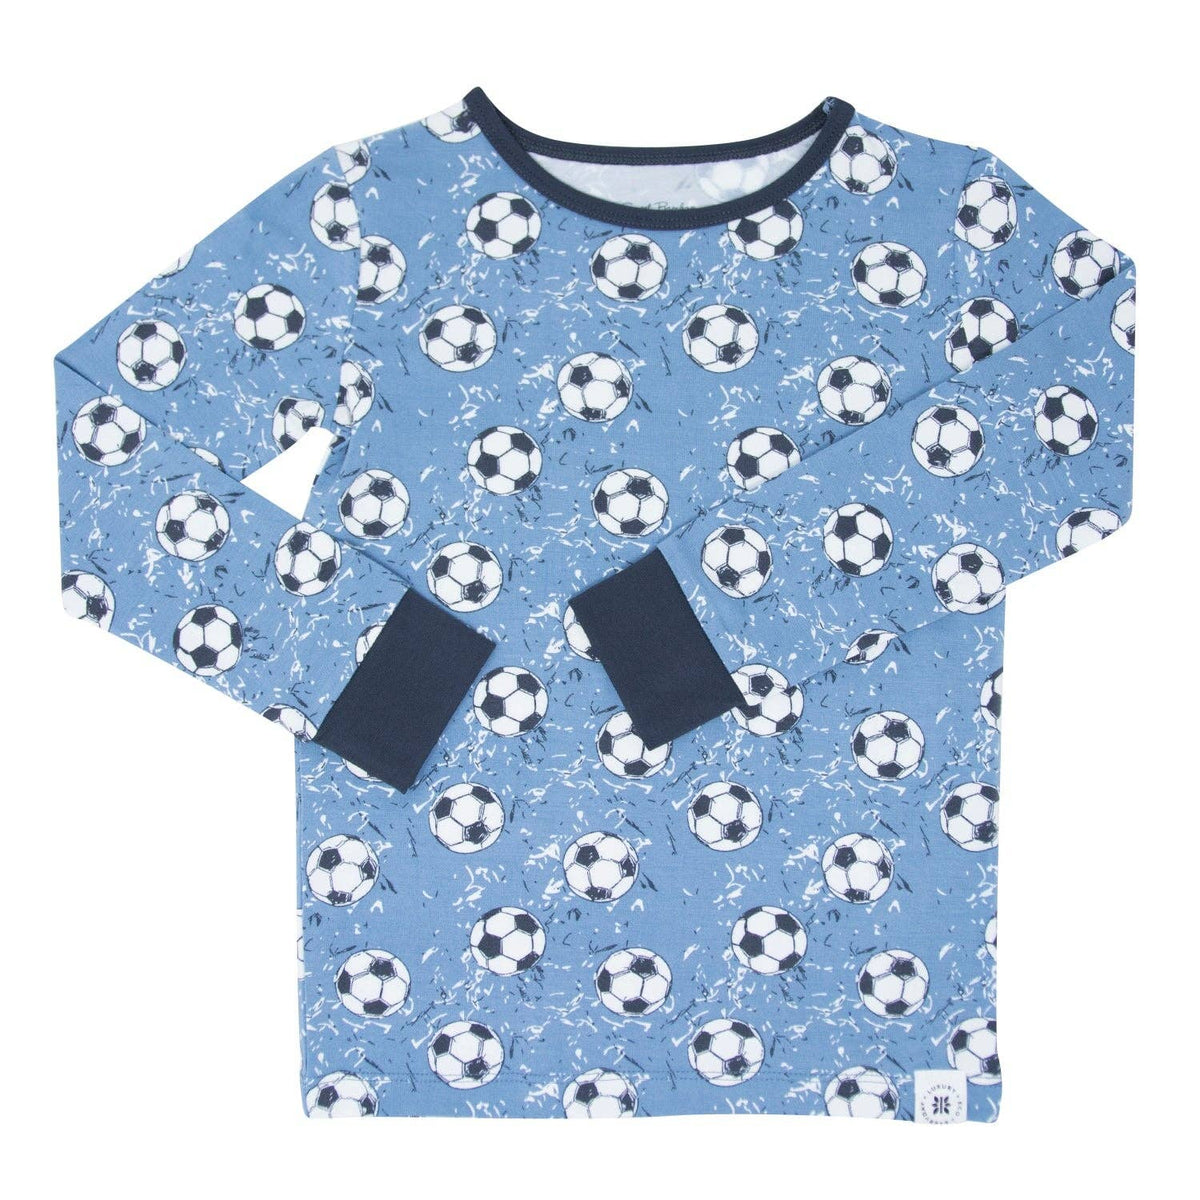 Big Kid Pajama - Soccer Captain